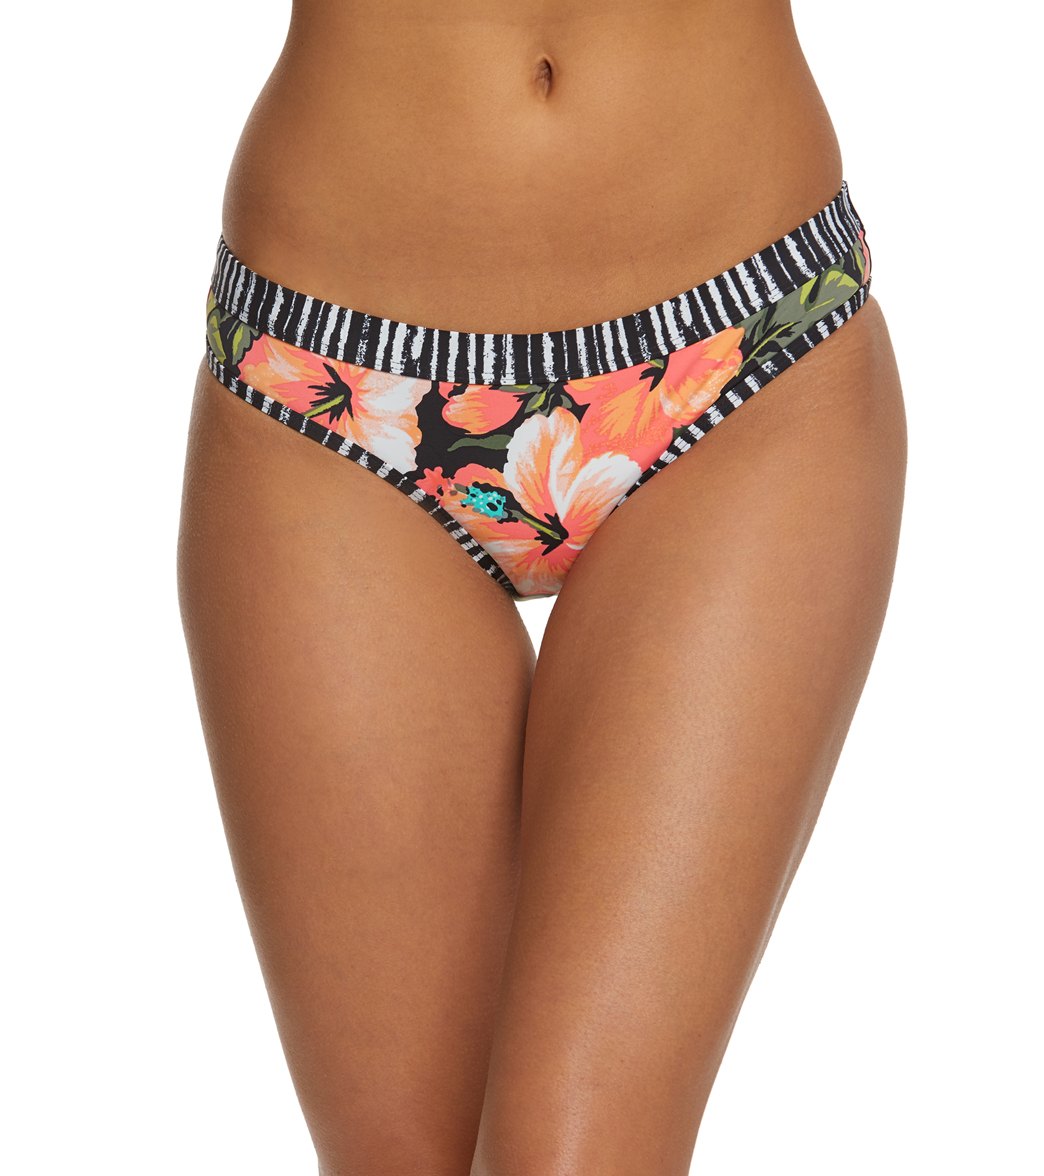 Skye Boracay Banded Hipster Bikini Bottom - Black Xl - Swimoutlet.com